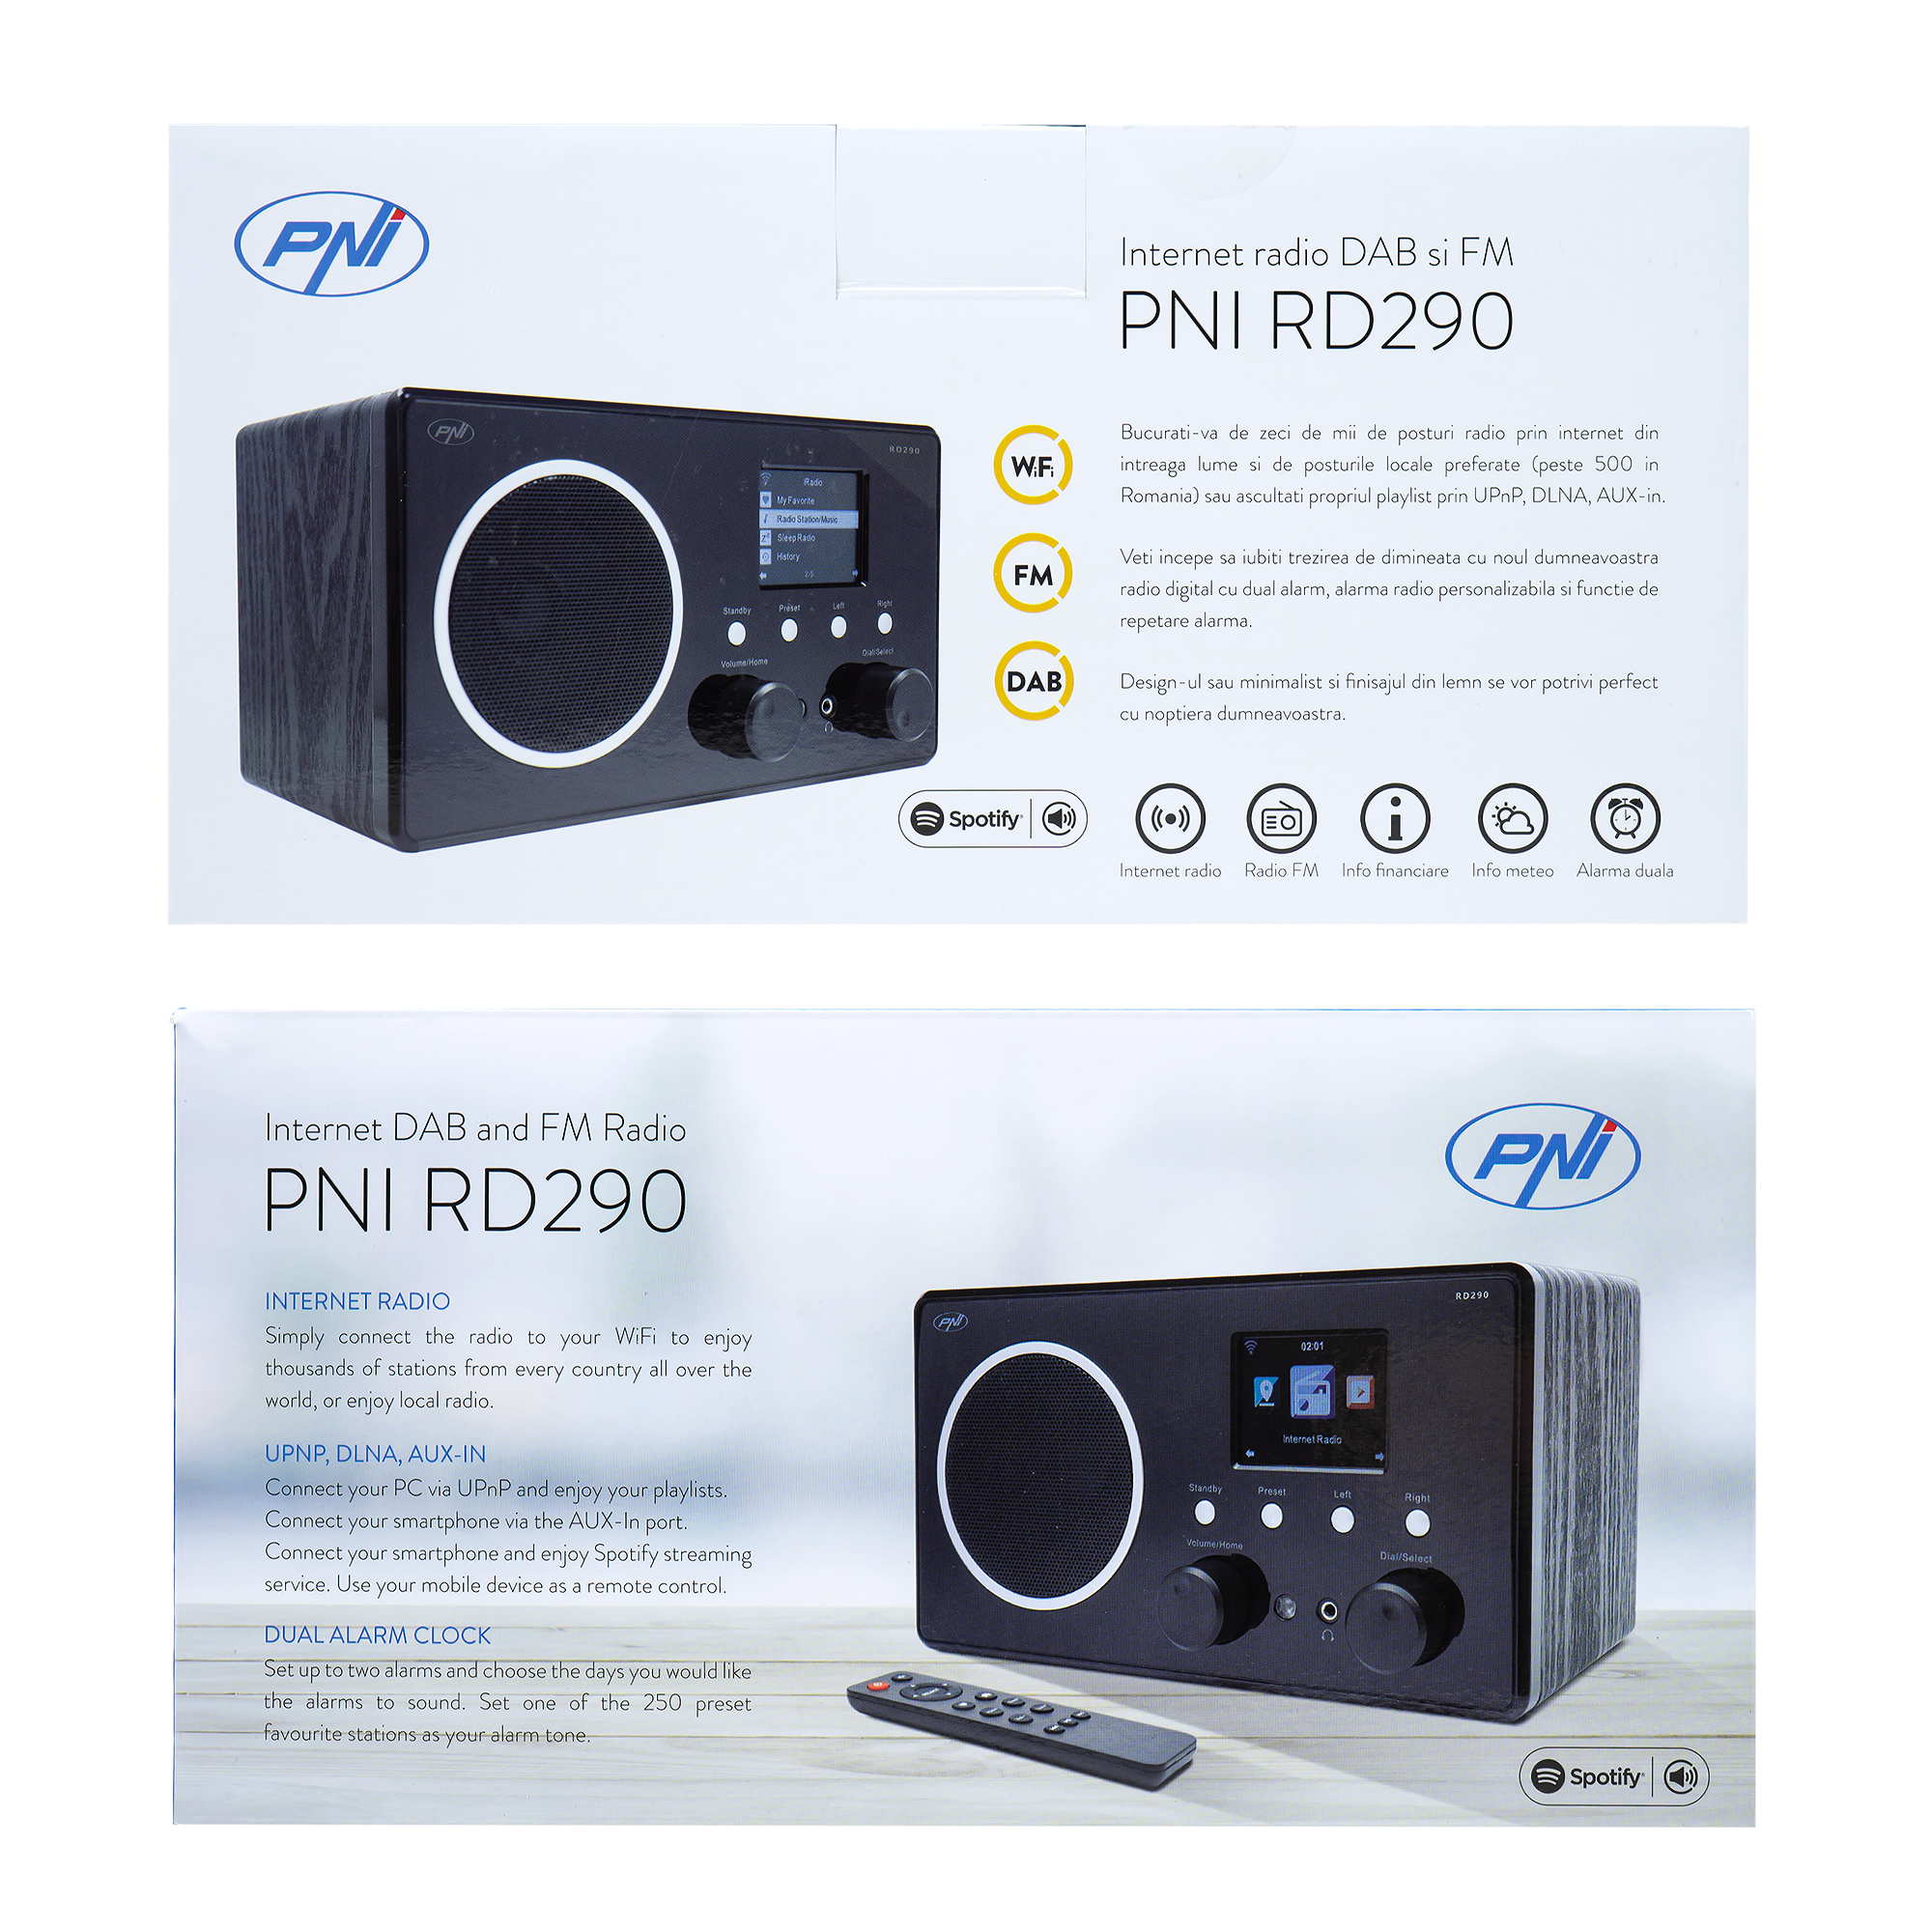 Internet radio DAB si FM PNI RD290 prin Wi-Fi, analog FM, Spotify Connect, APP Air Music Control, DLNA si UPnP, Dual Alarm, AUX-in 3.5, Line-out 3.5, ecran color 2.4 inch image11